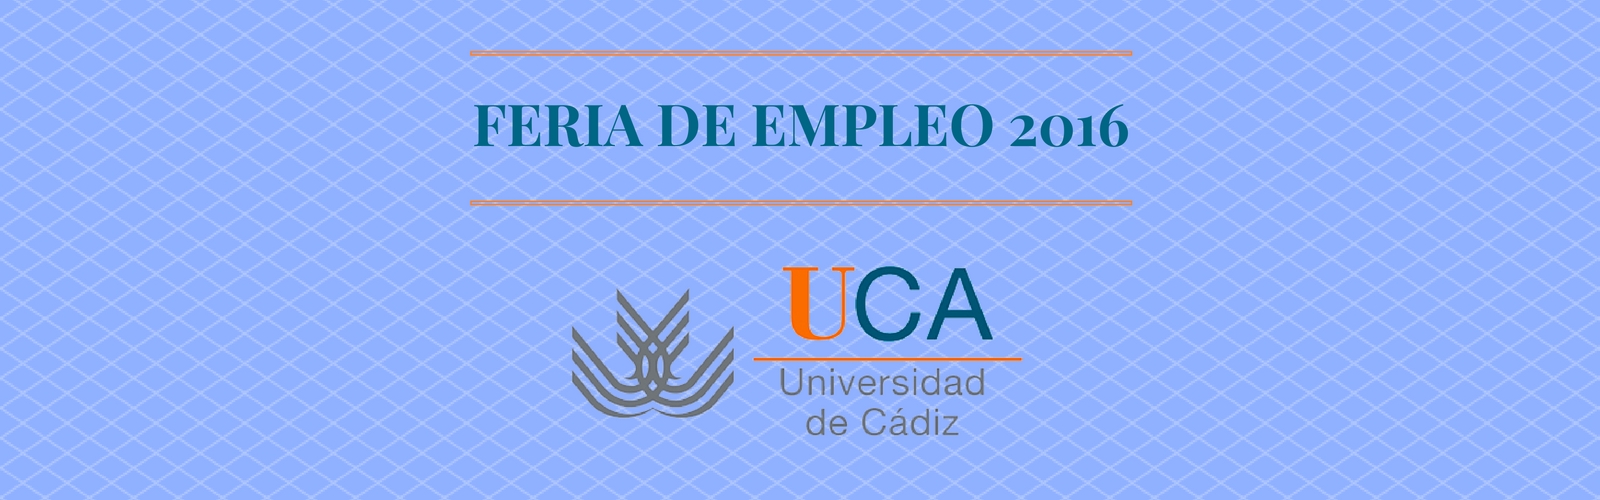 Feria de Empleo de la Universidad de Cádiz 2016